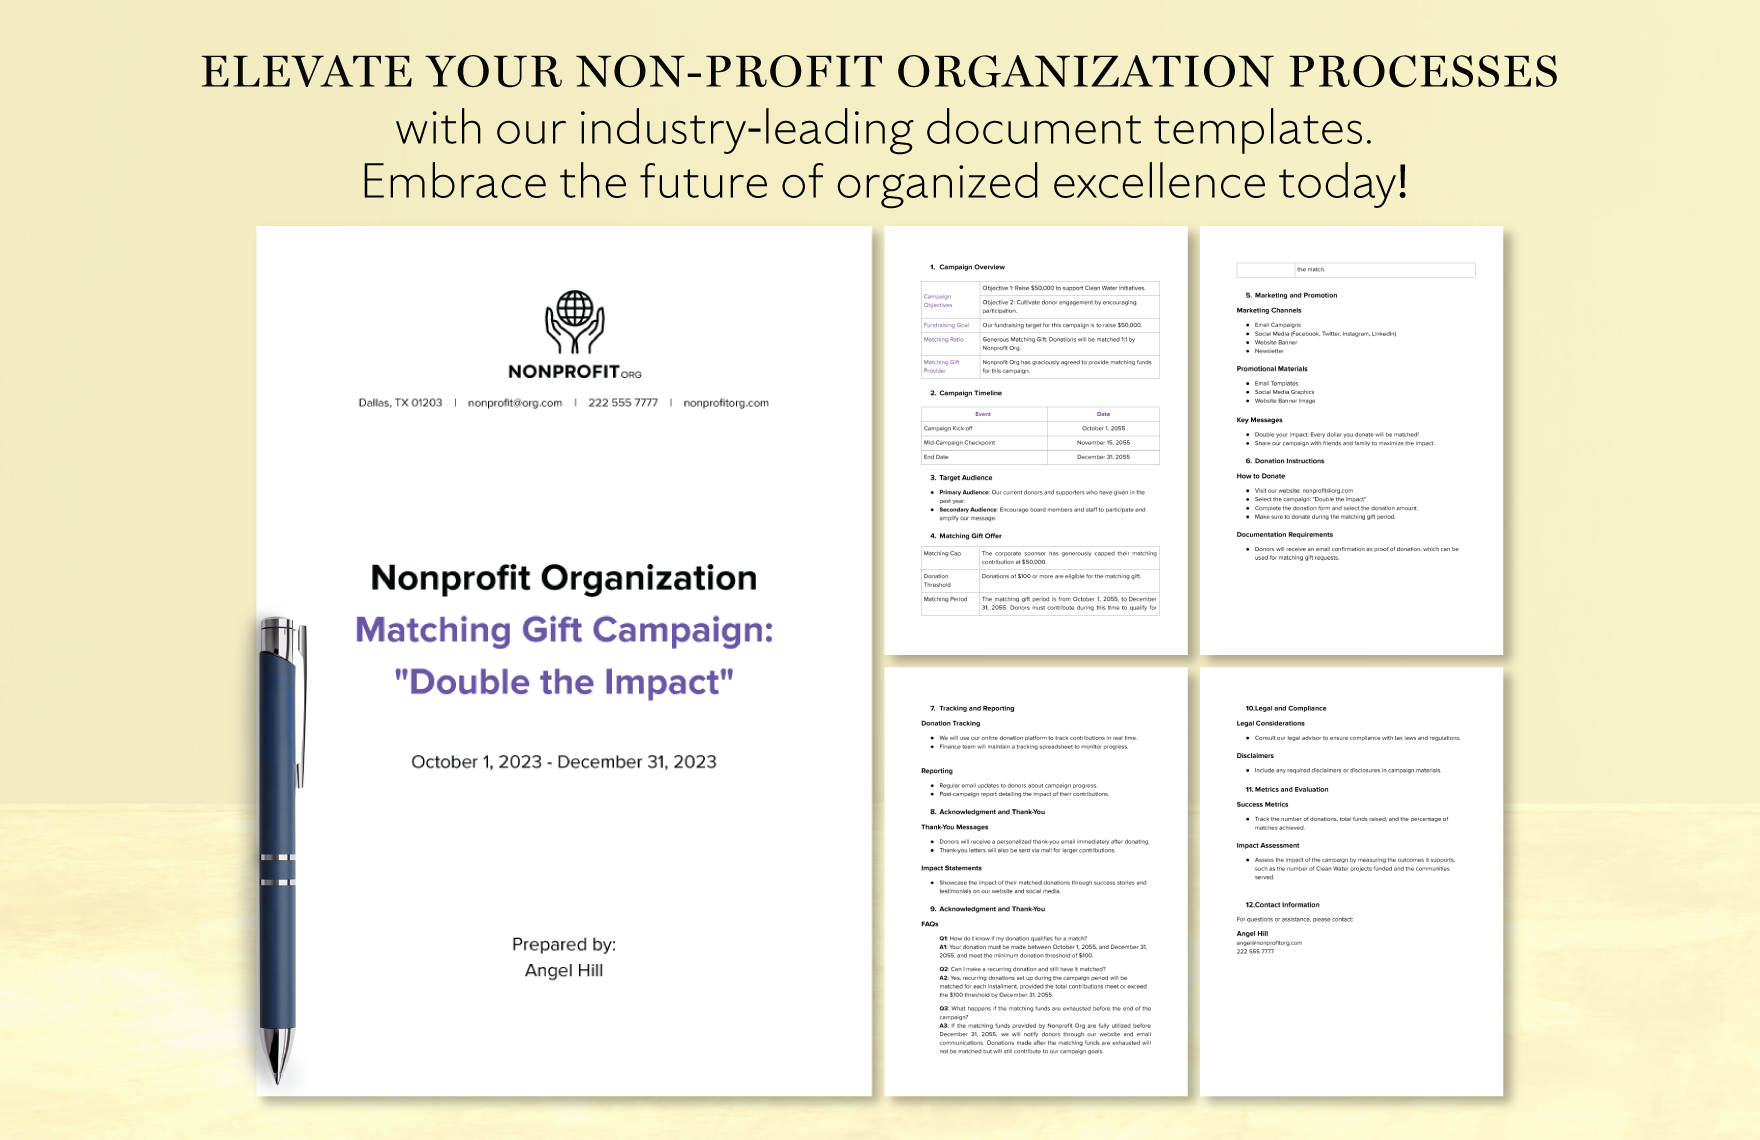 Nonprofit Organization Matching Gift Campaign Template